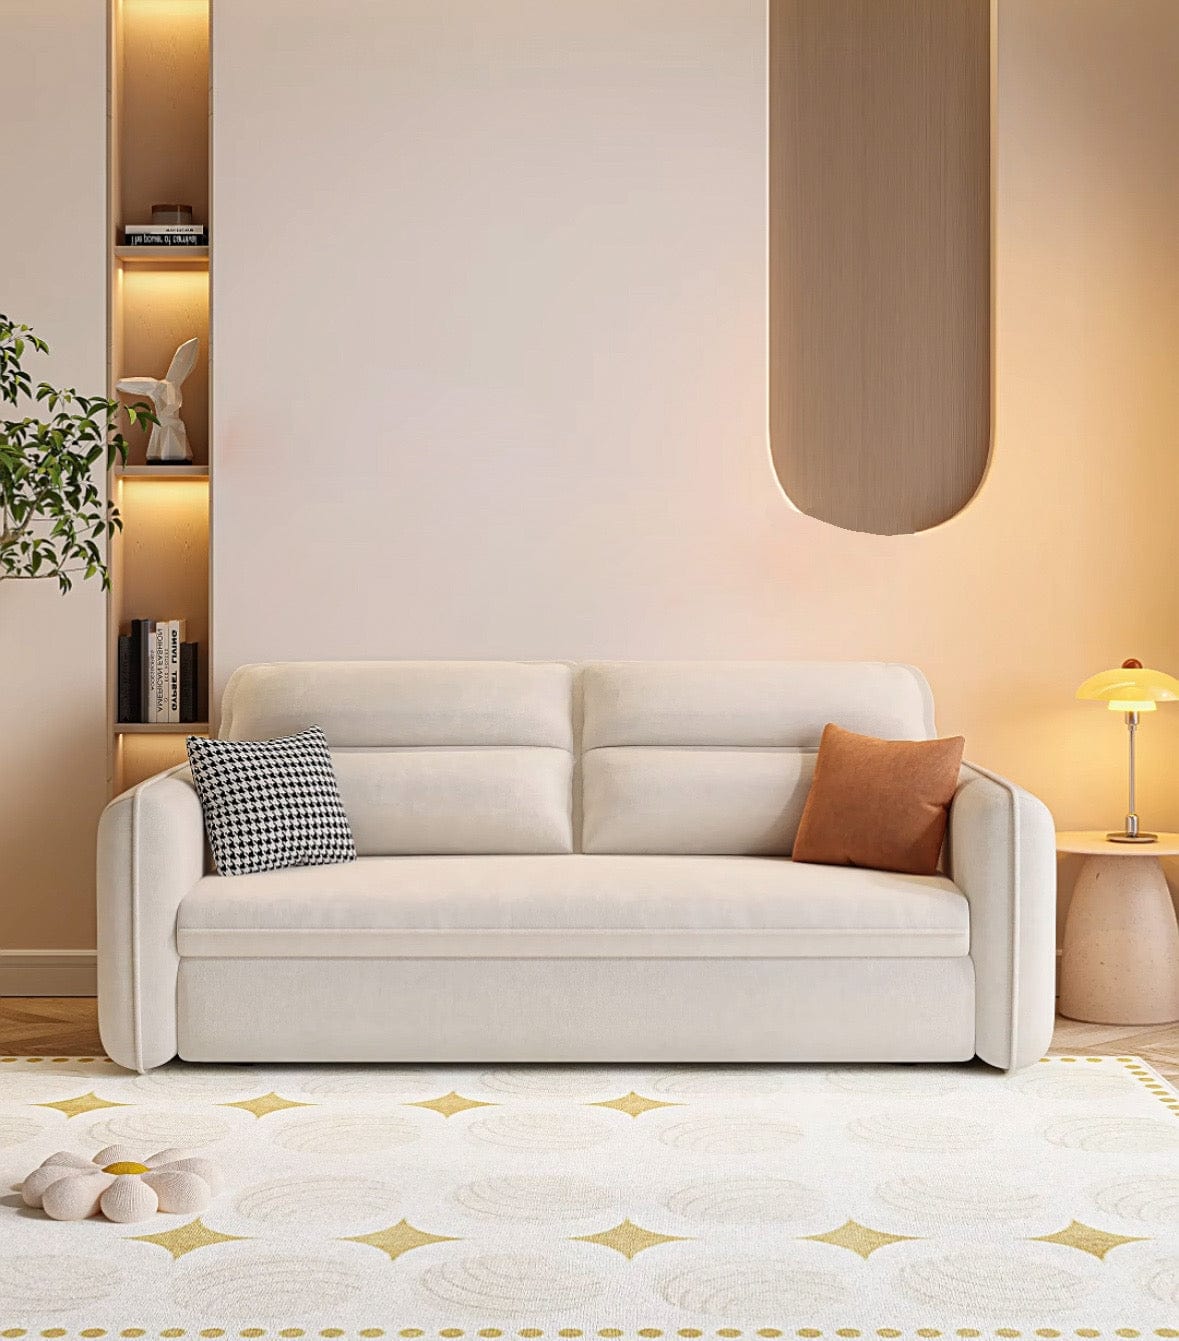 Home Atelier Hazel Scratch Resistant Storage Sofa Bed